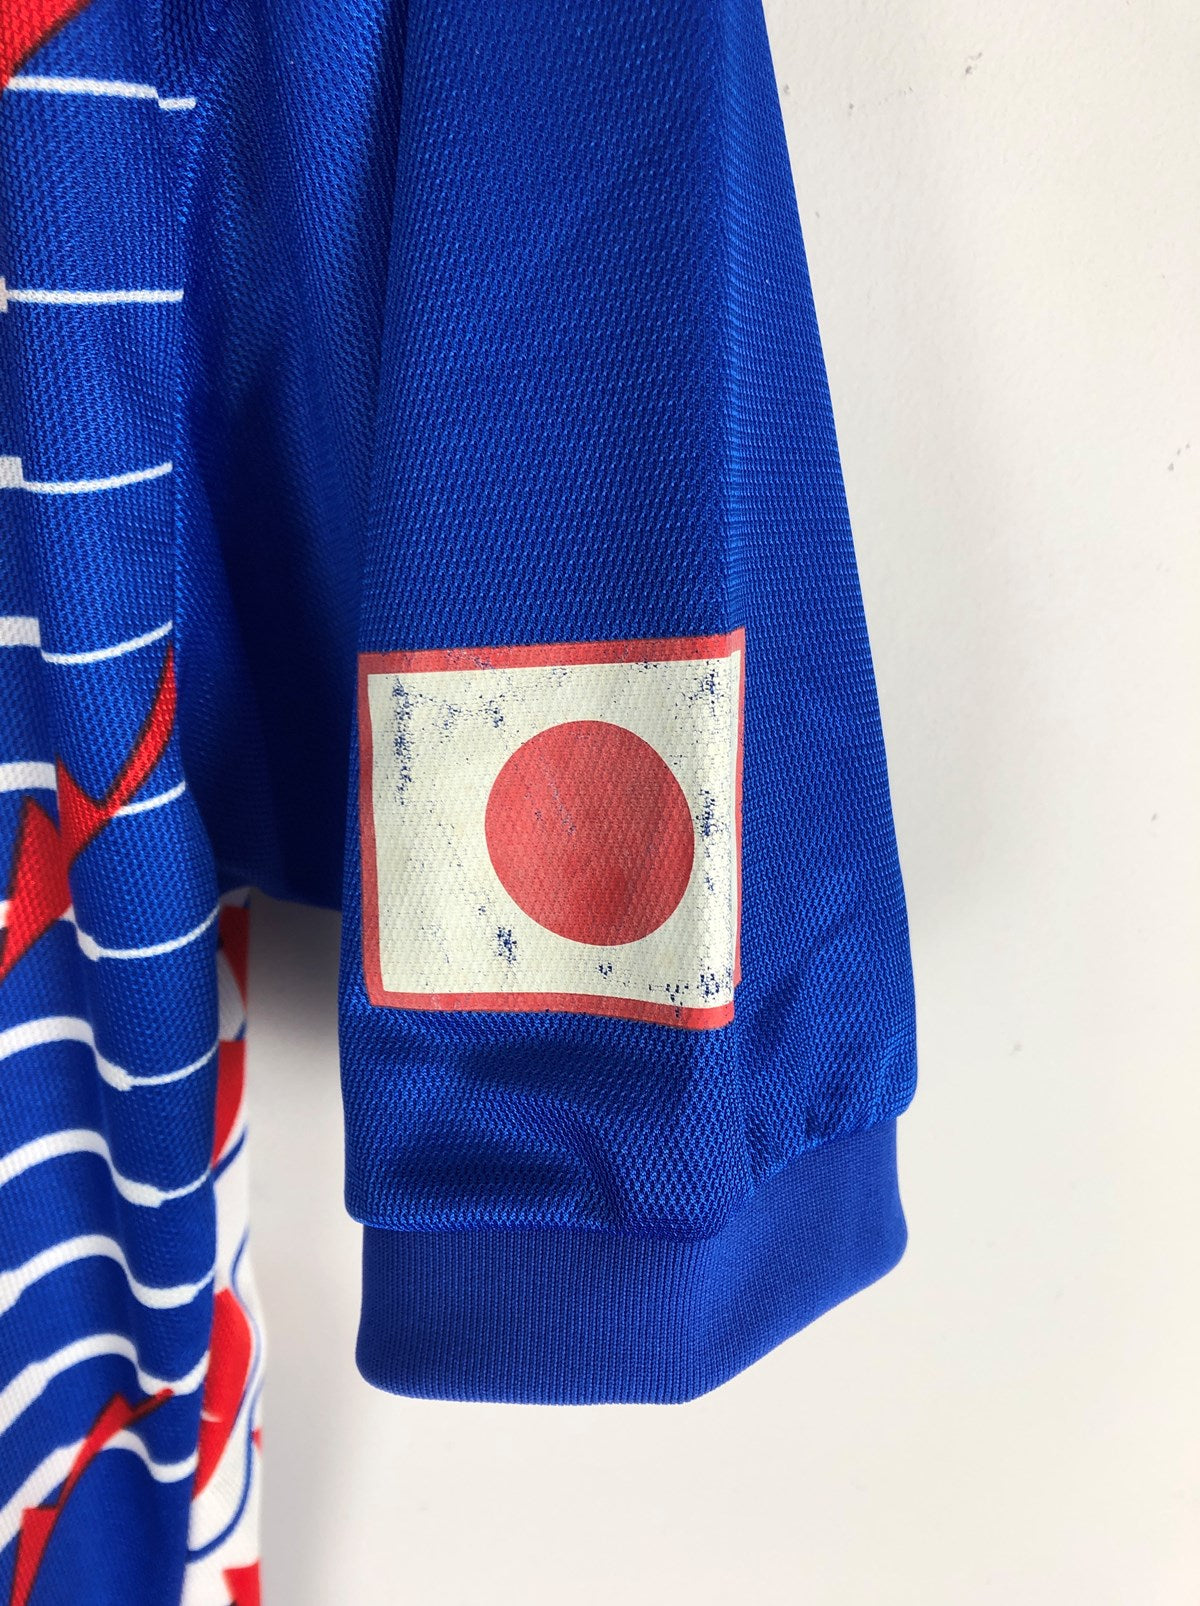 Japan classic football shirt